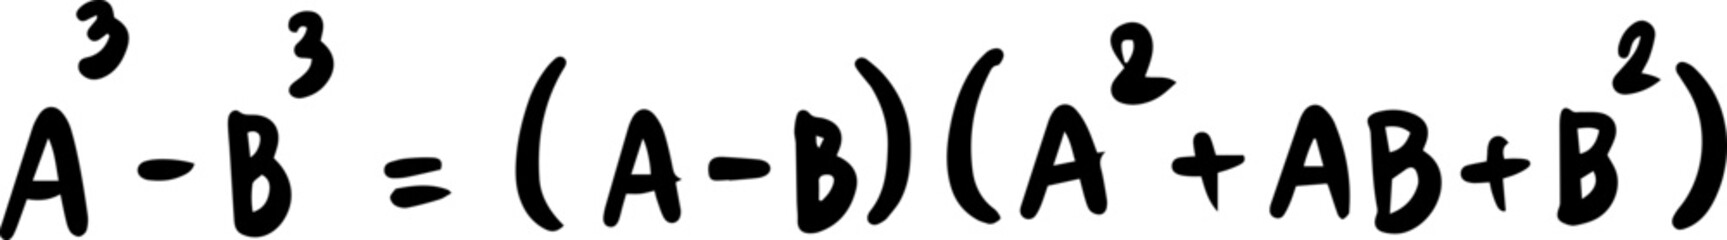 Polynomial math handwritten